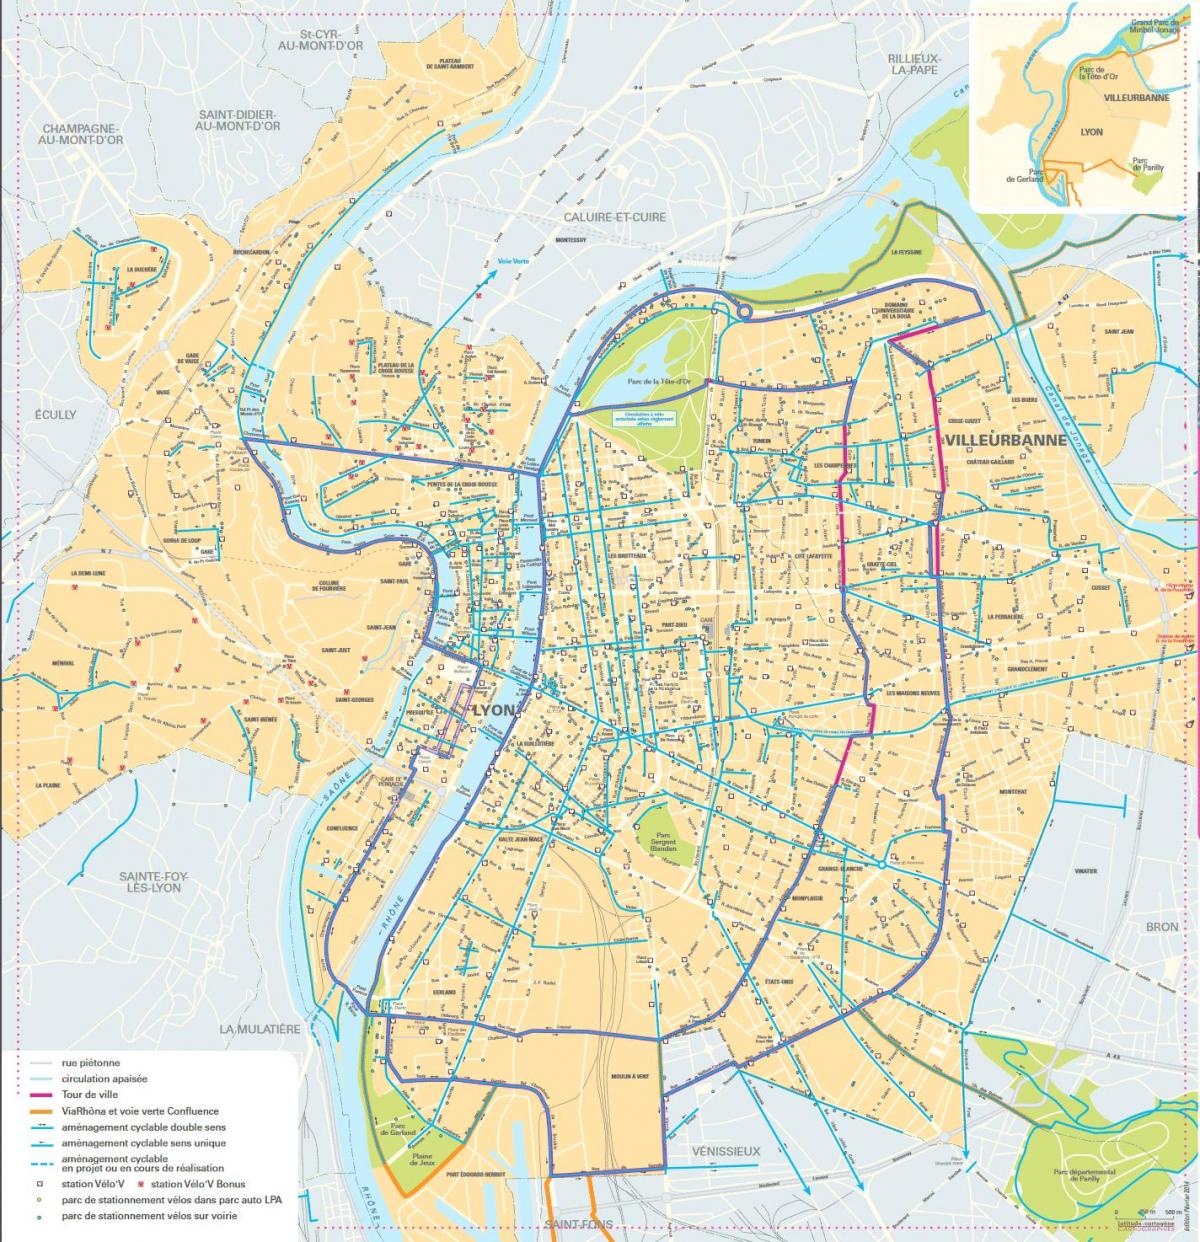 zemljevid Lyon kolo